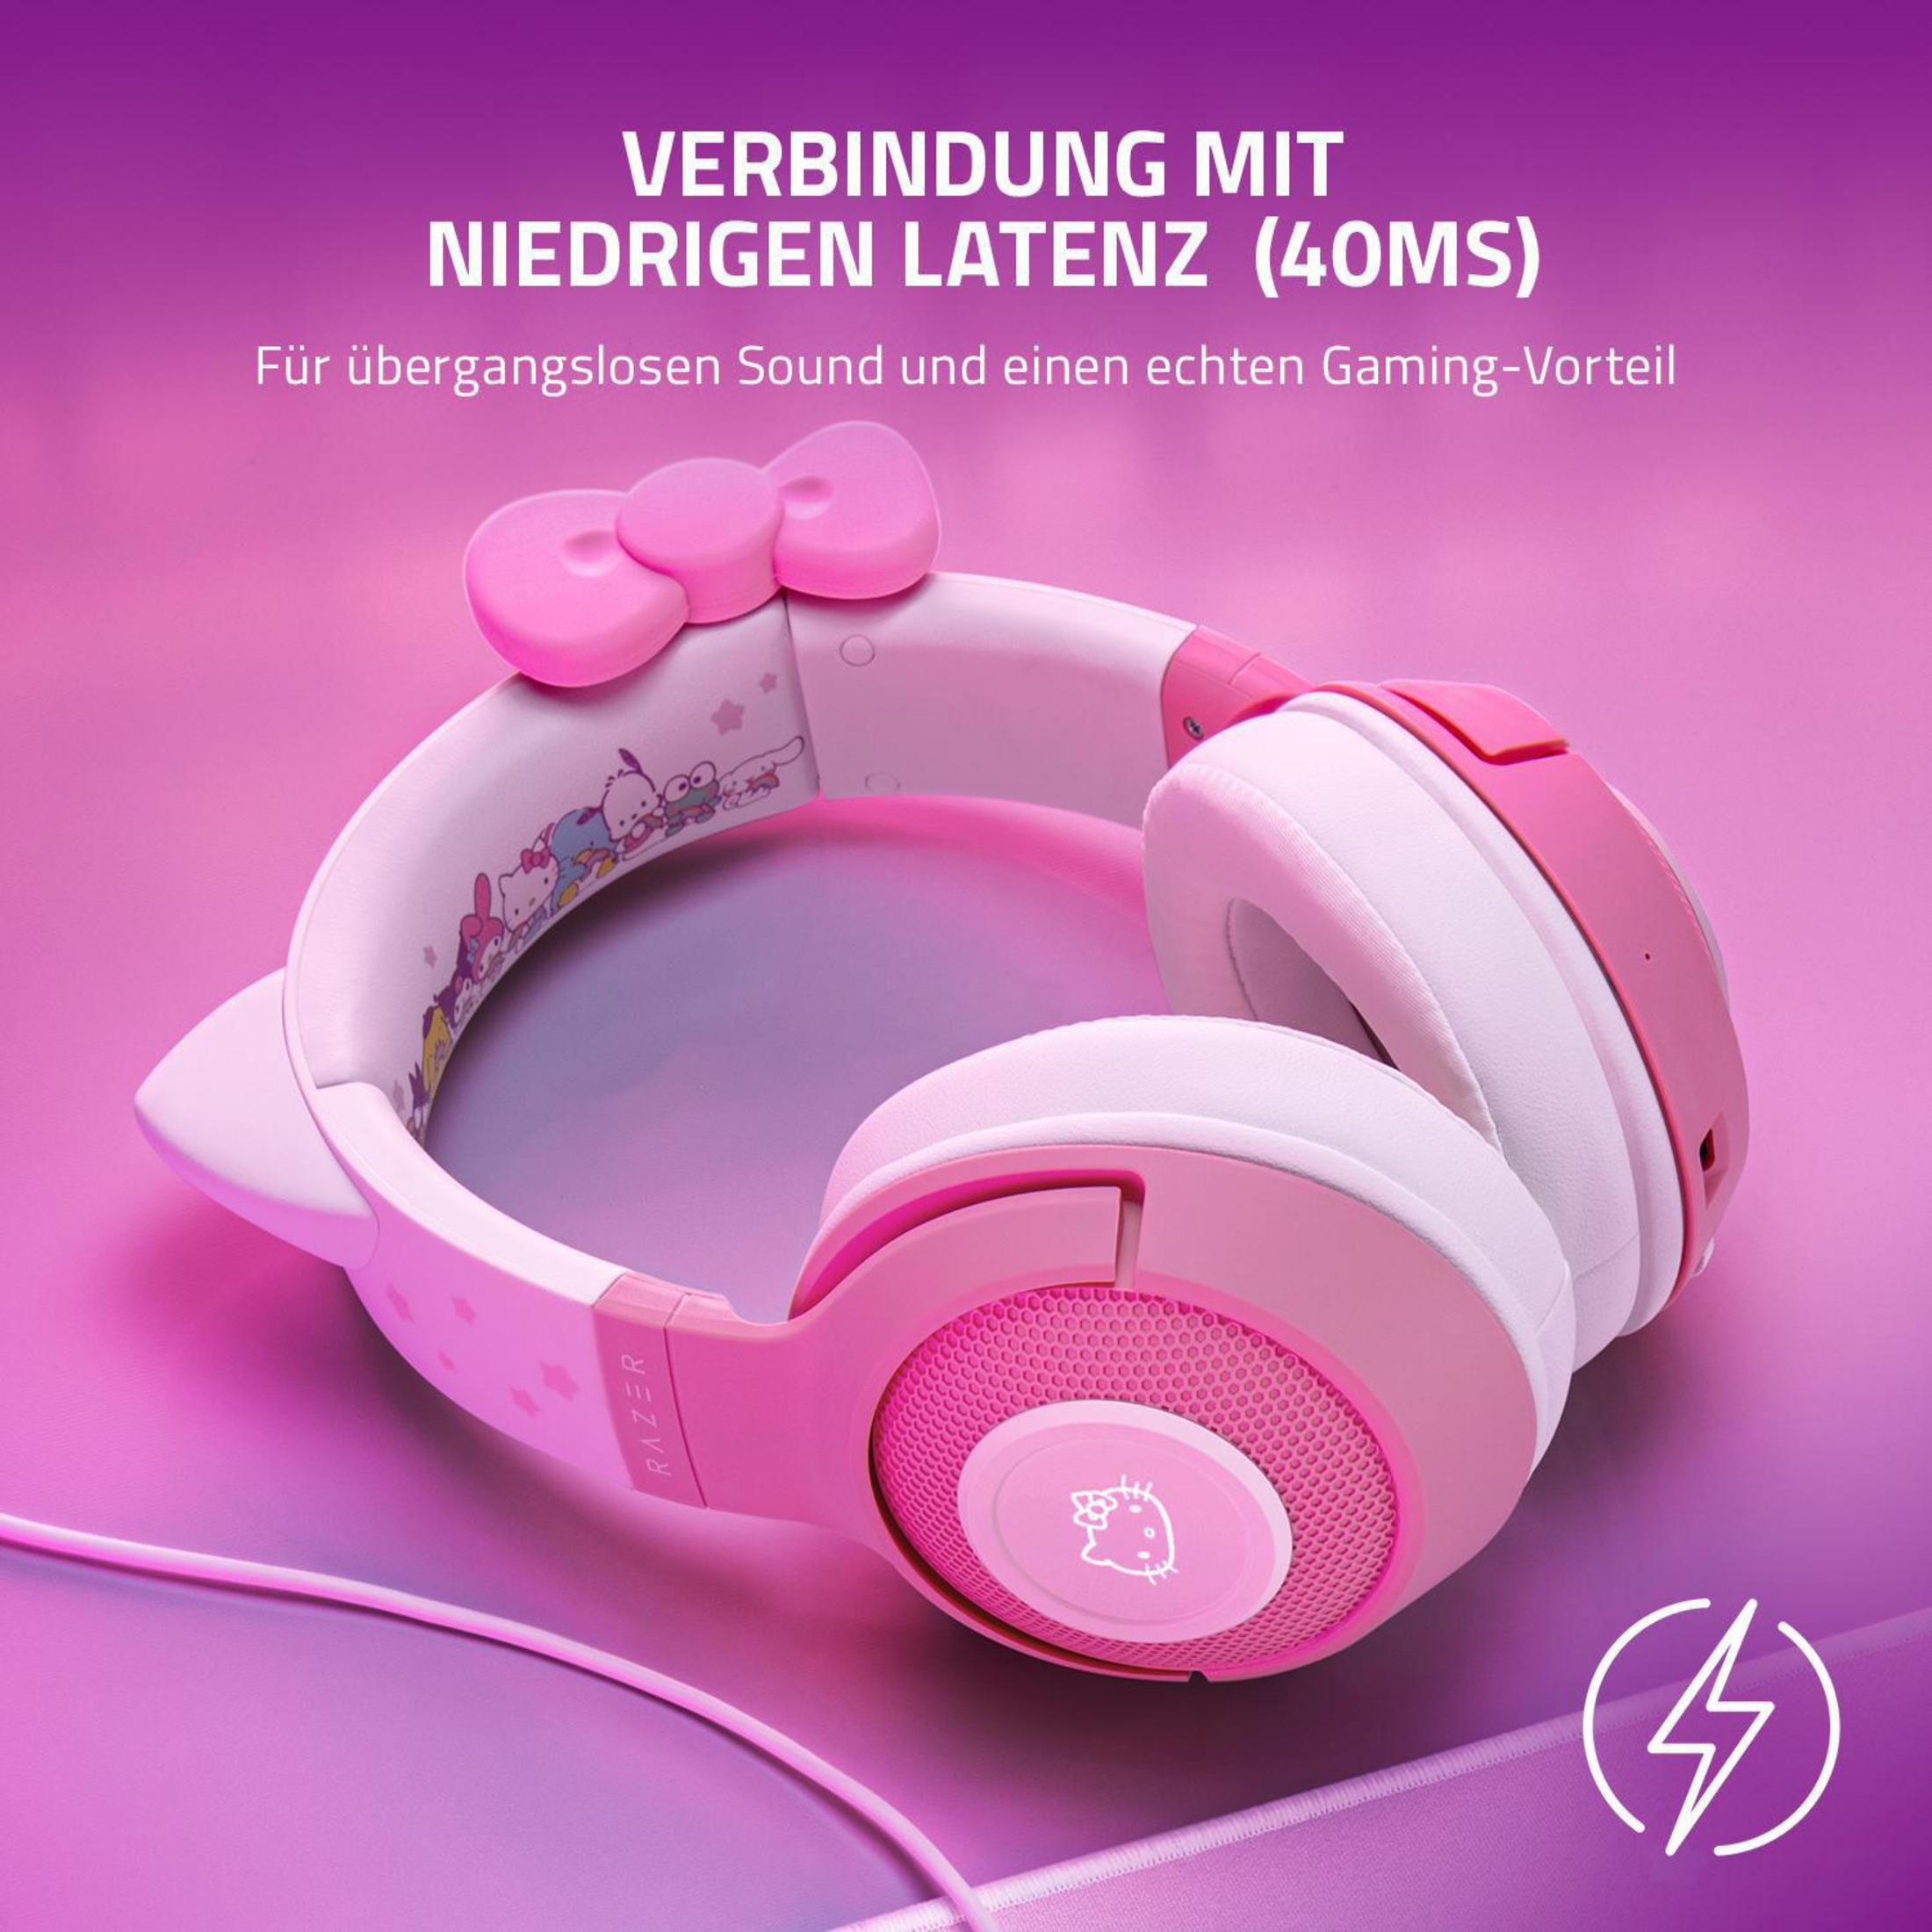 RAZER RZ04-03520300-R3M1 KRAKEN Over-ear Headset HELLO Quartz Pink Bluetooth ED., / KITTY BT